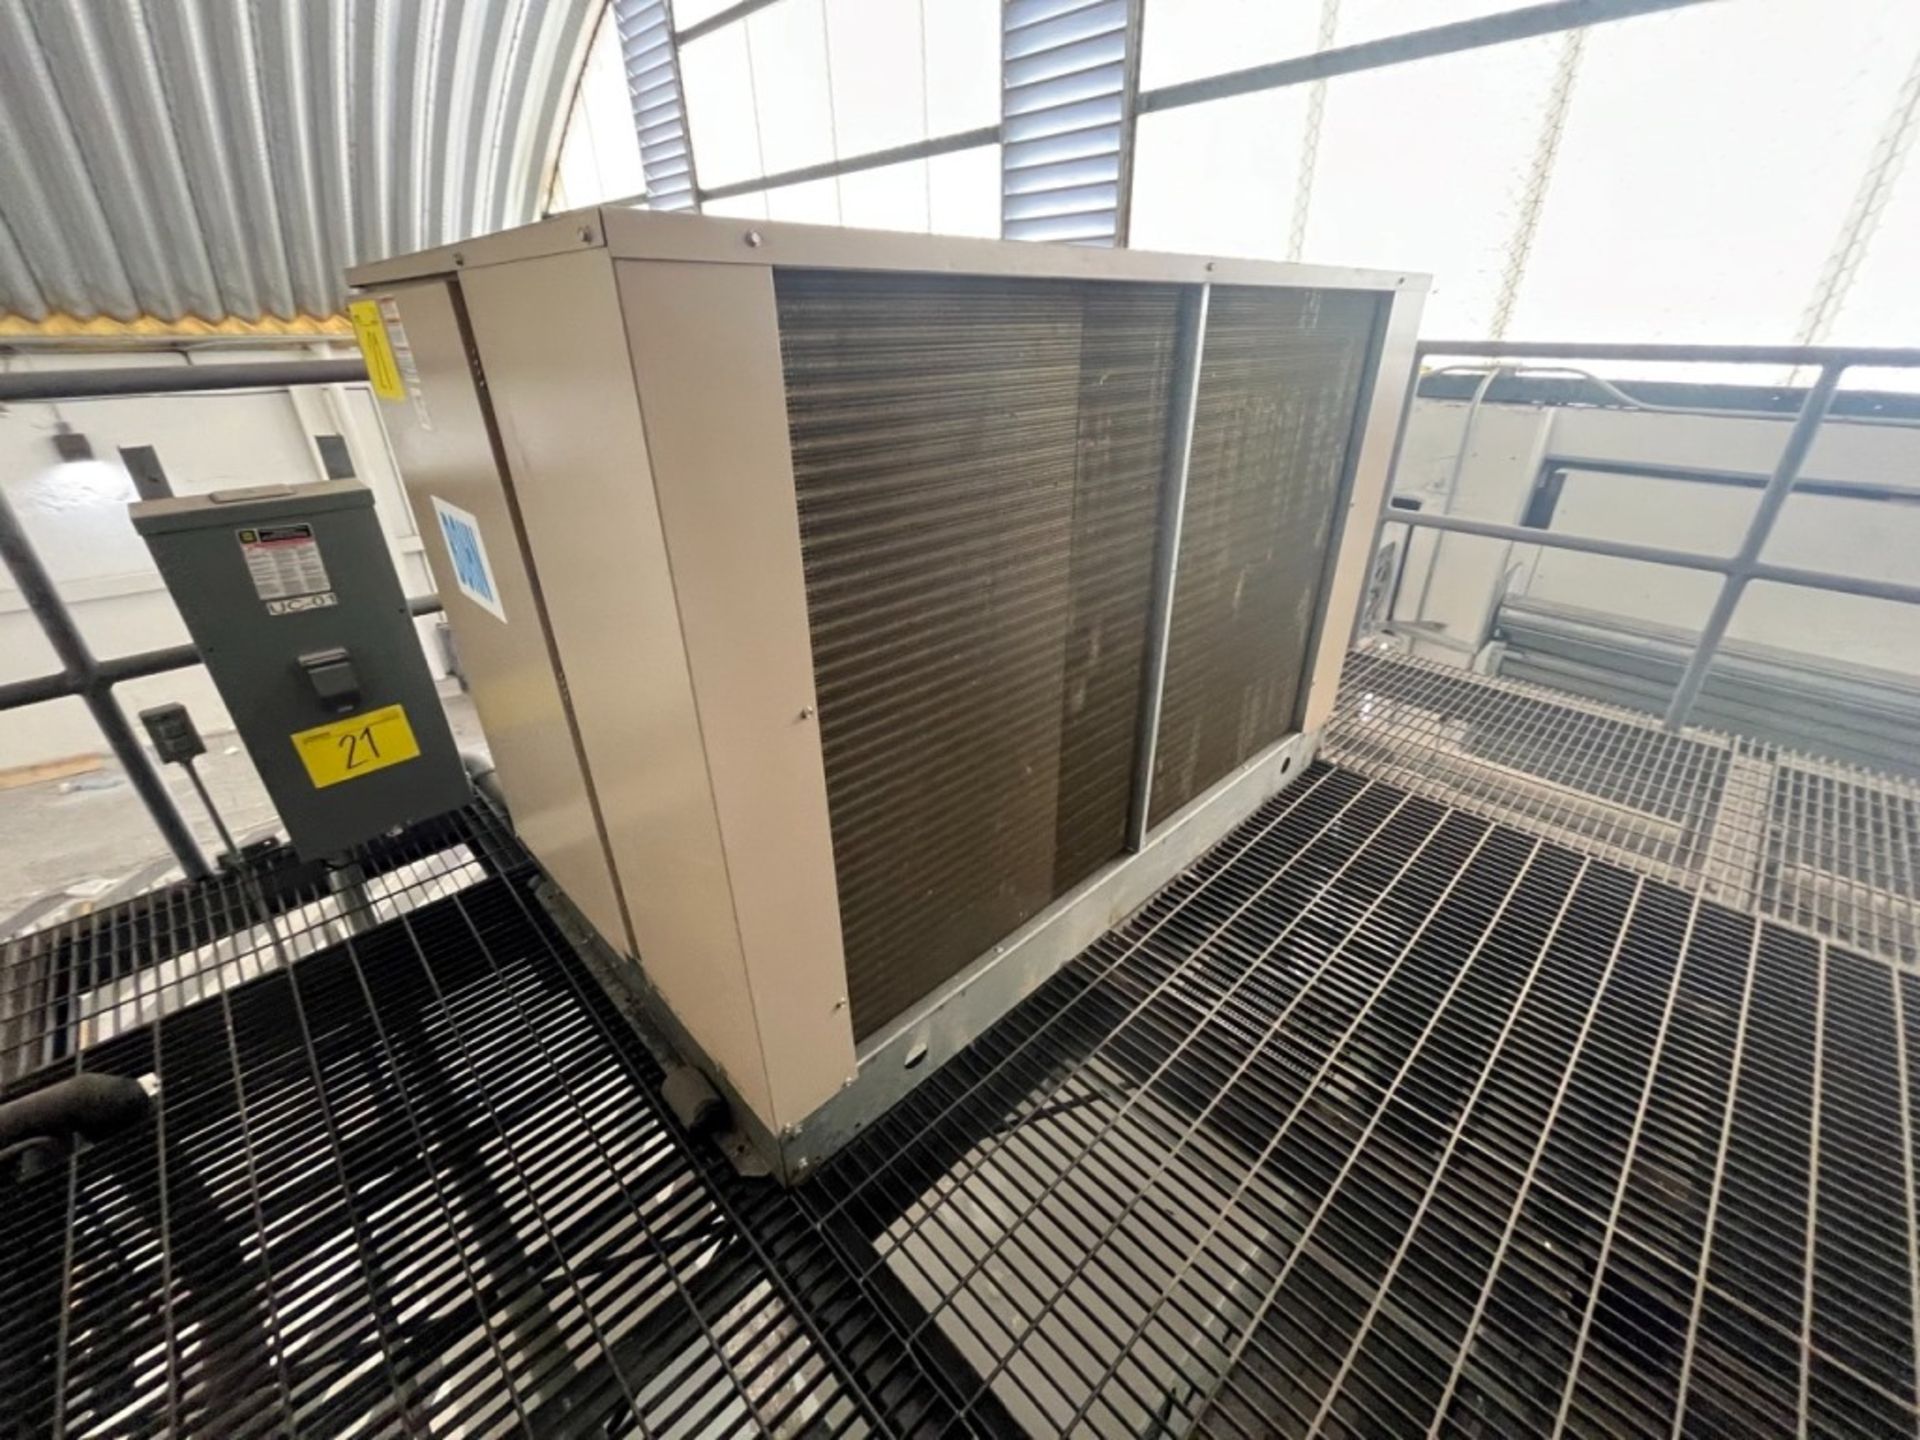 (NEW) Bohn refrigeration condensing unit, Model MBZX1500L6C, Serial No. M21K02616, 208-230V 60 Hz - Image 2 of 22